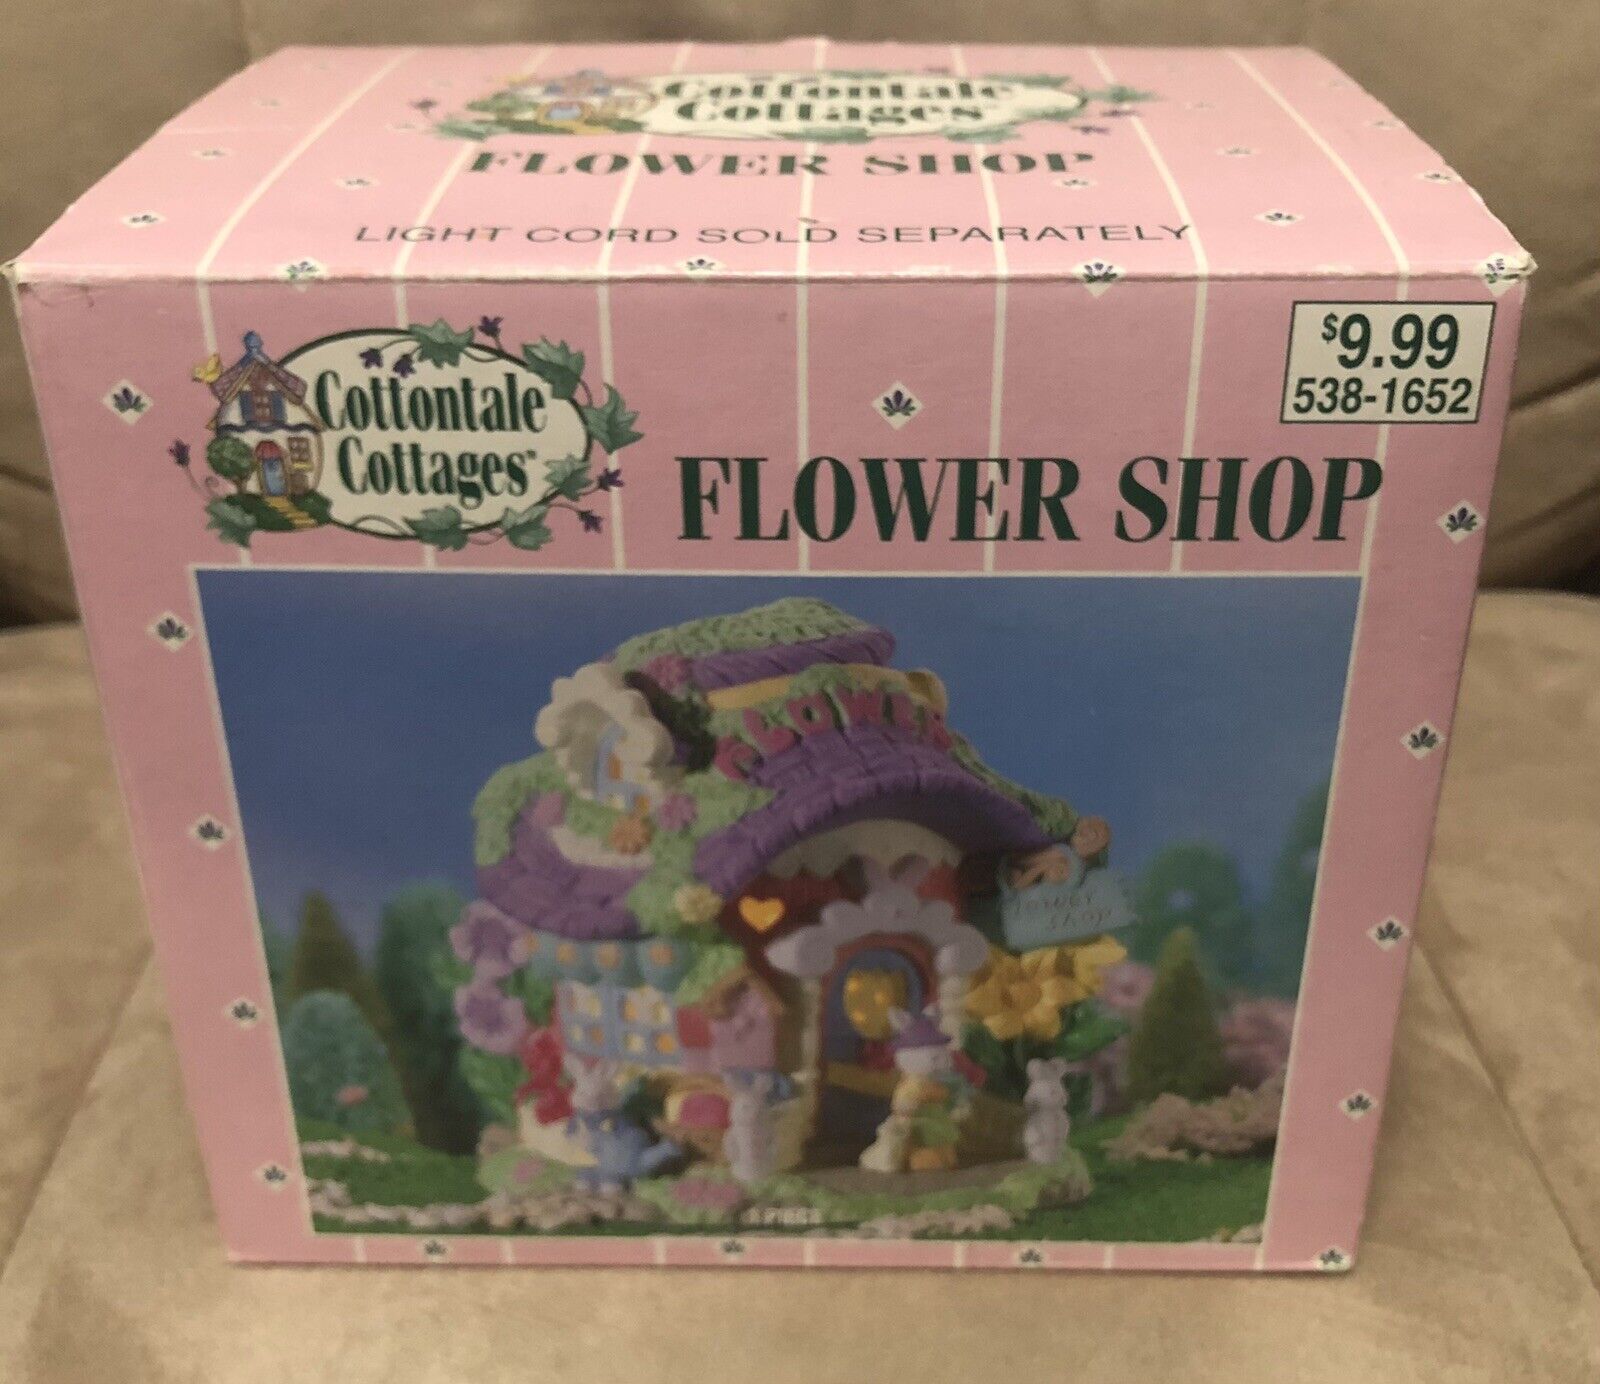 Cottontale Cottages “Flower Shop” Porcelain Easter House 538-1652